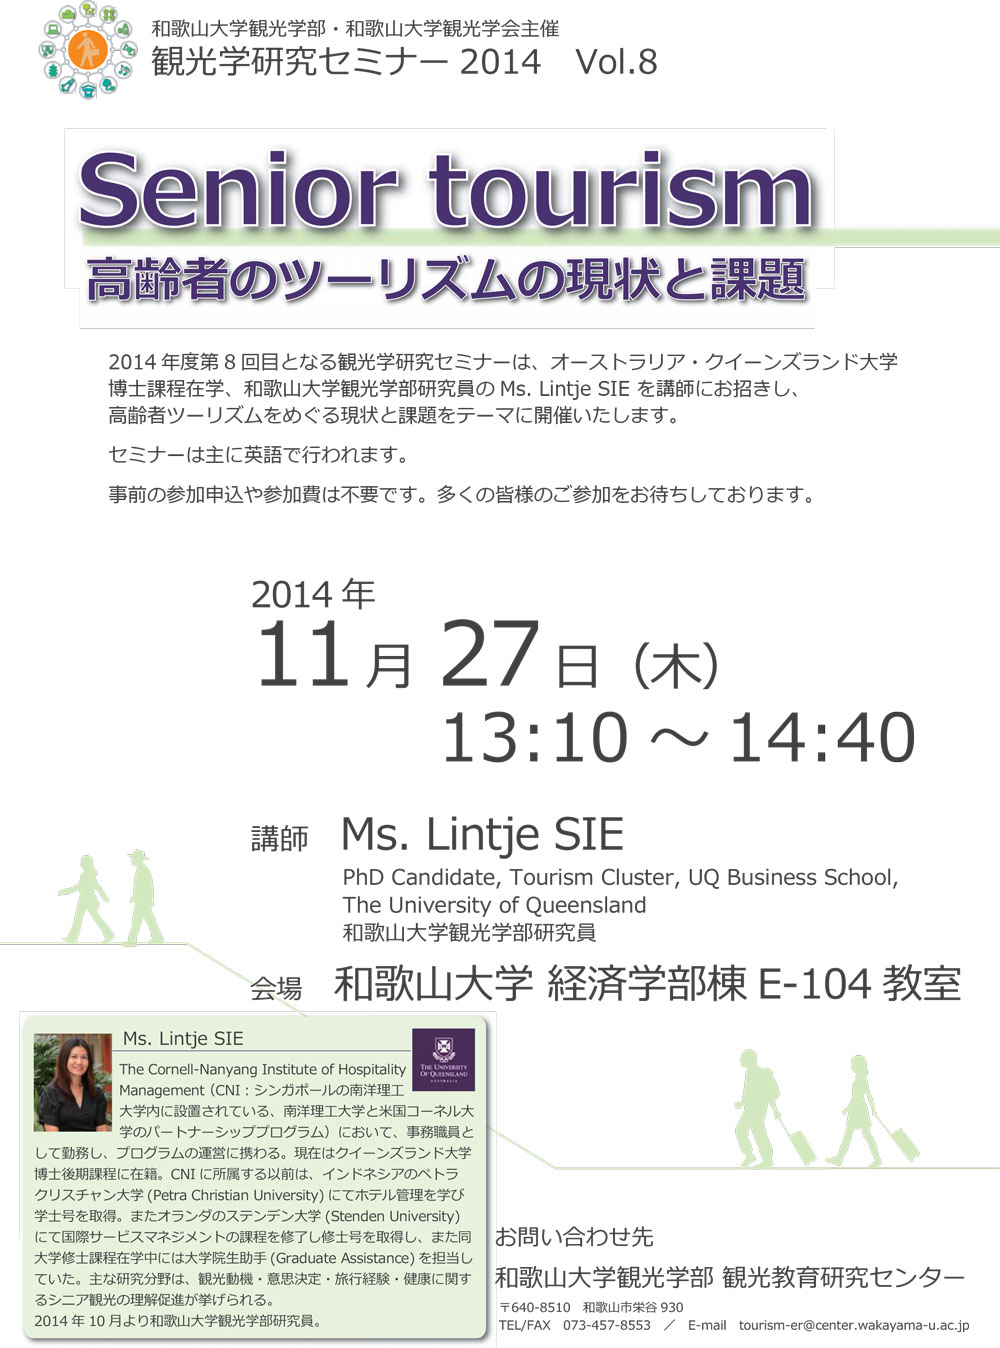 ts-seminar20141127.jpg